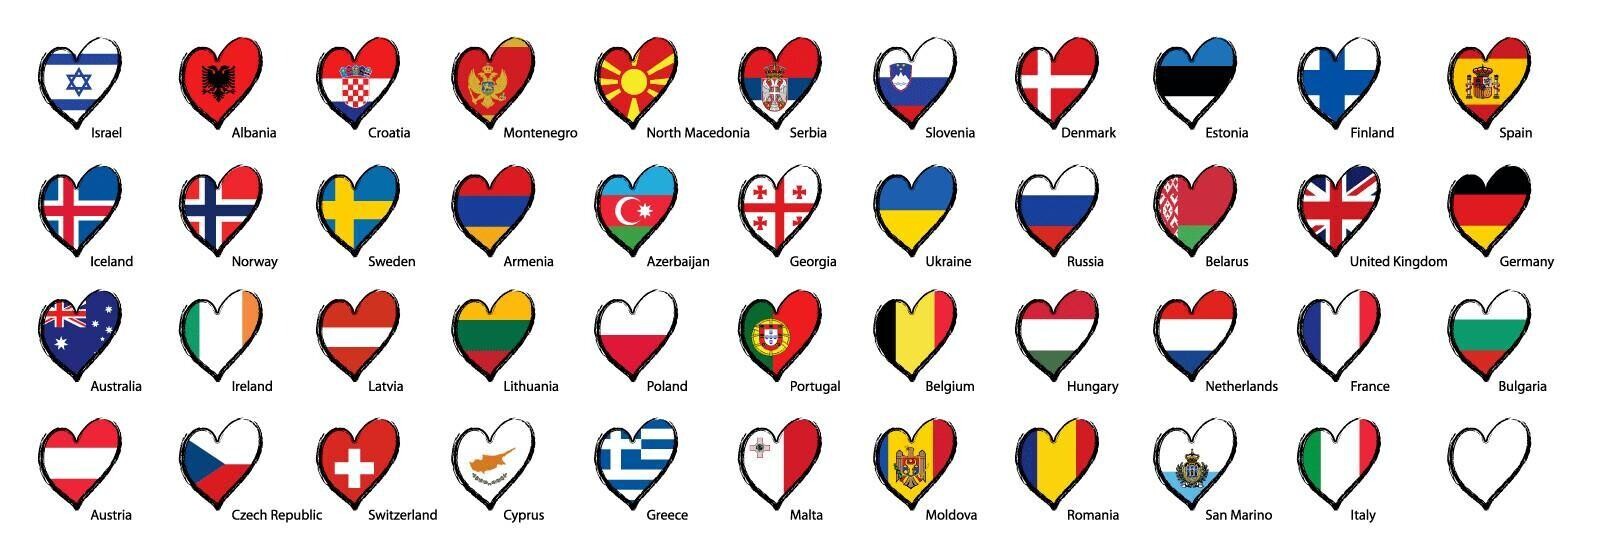 Eurovision Countries Flags